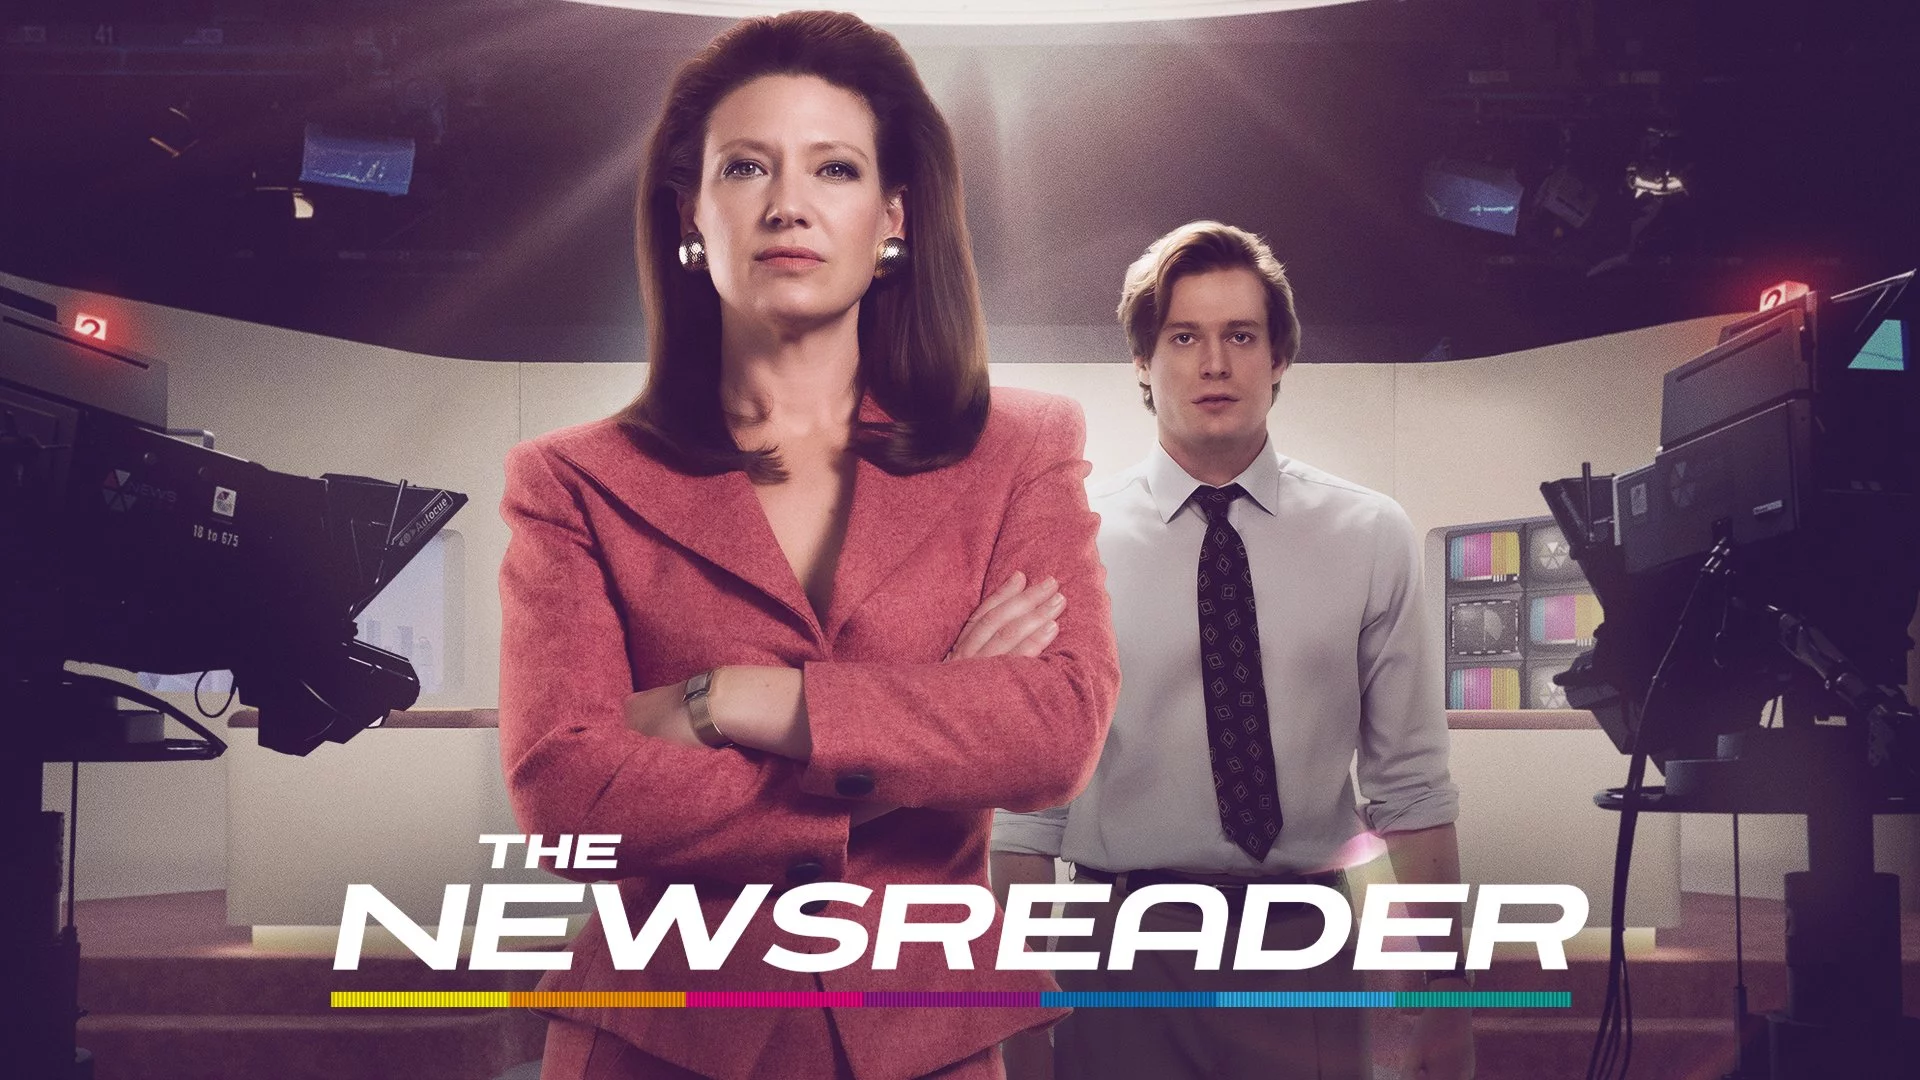 The Newsreader | Official Trailer